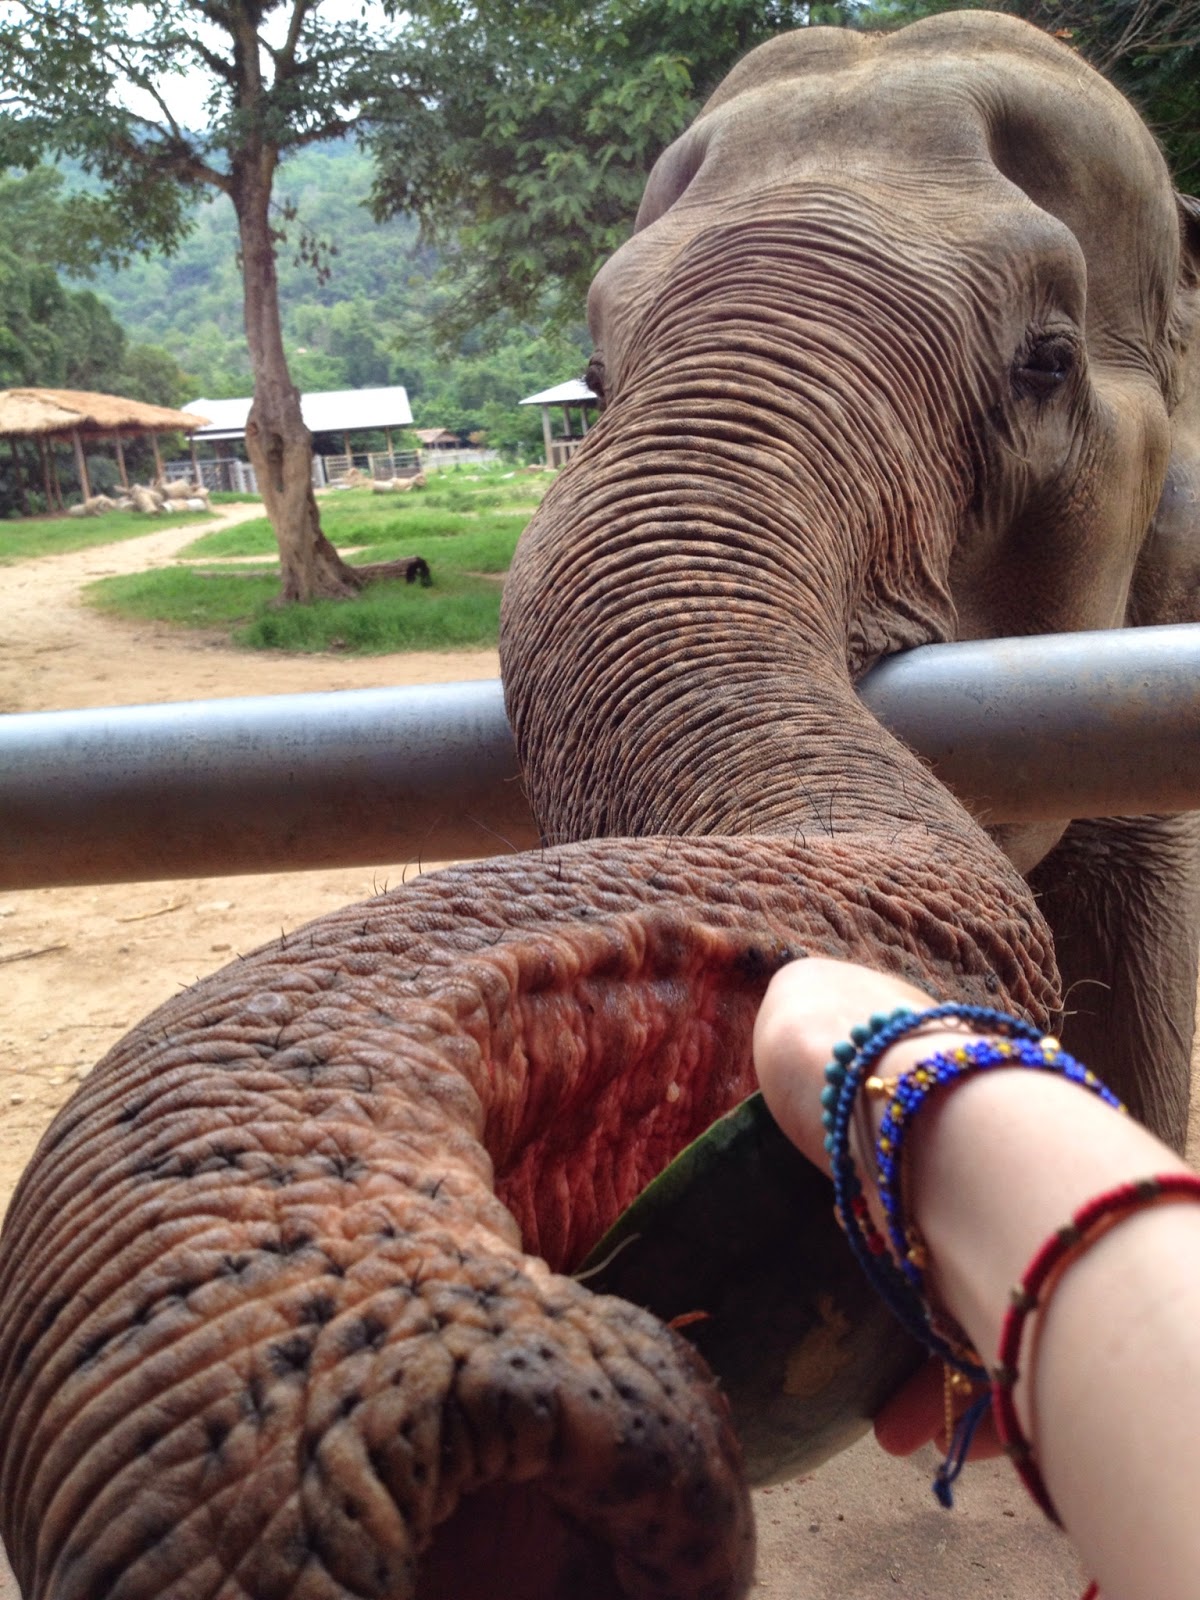 Chiang Mai - Elephant trunks feel funny!